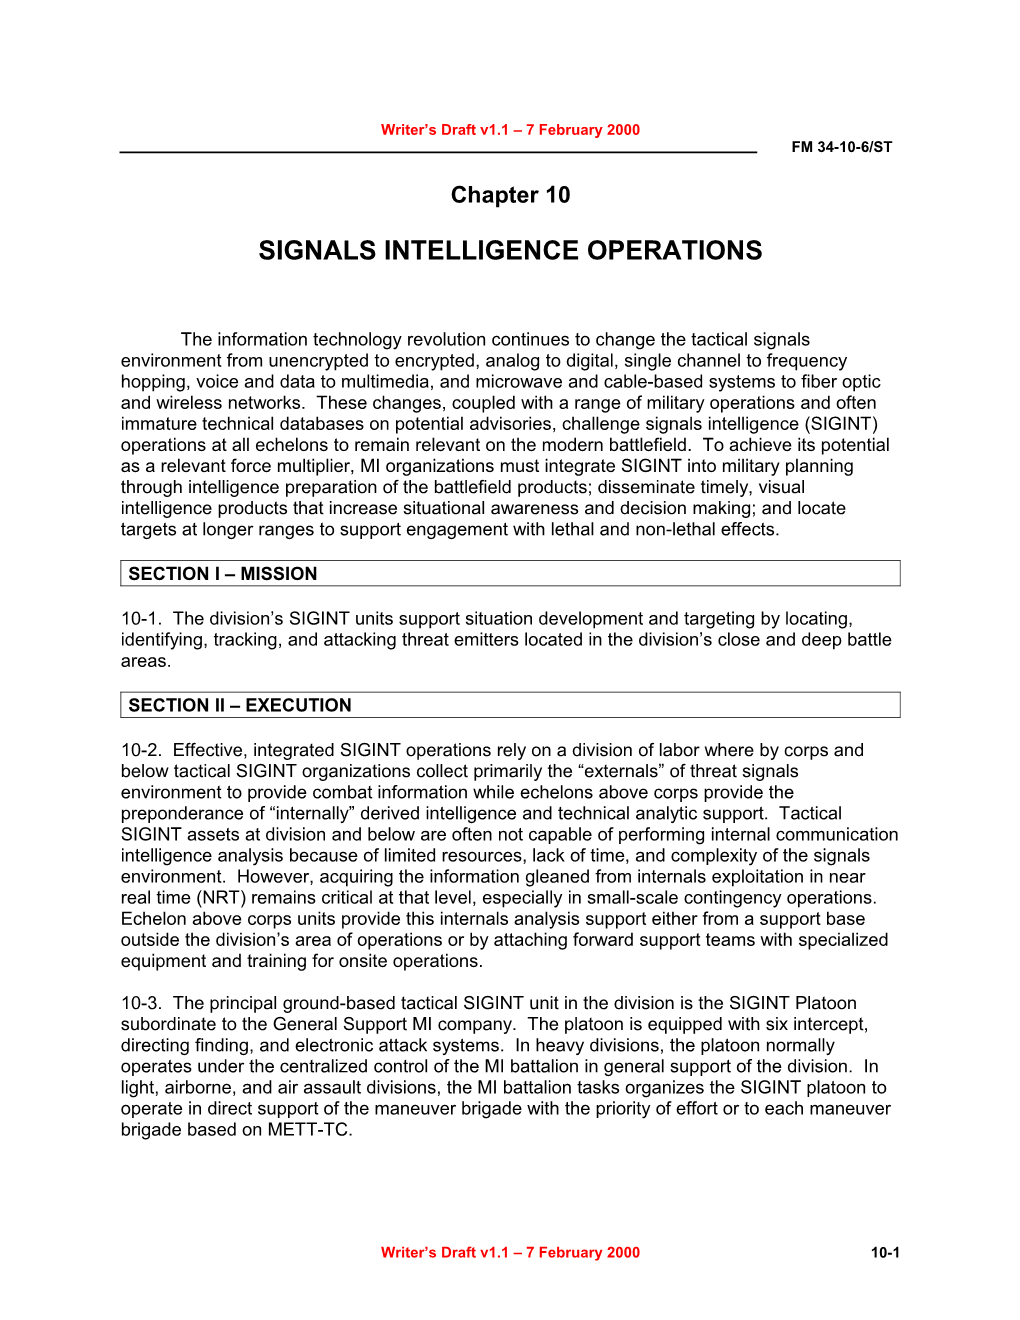 Signals Intelligence Operations